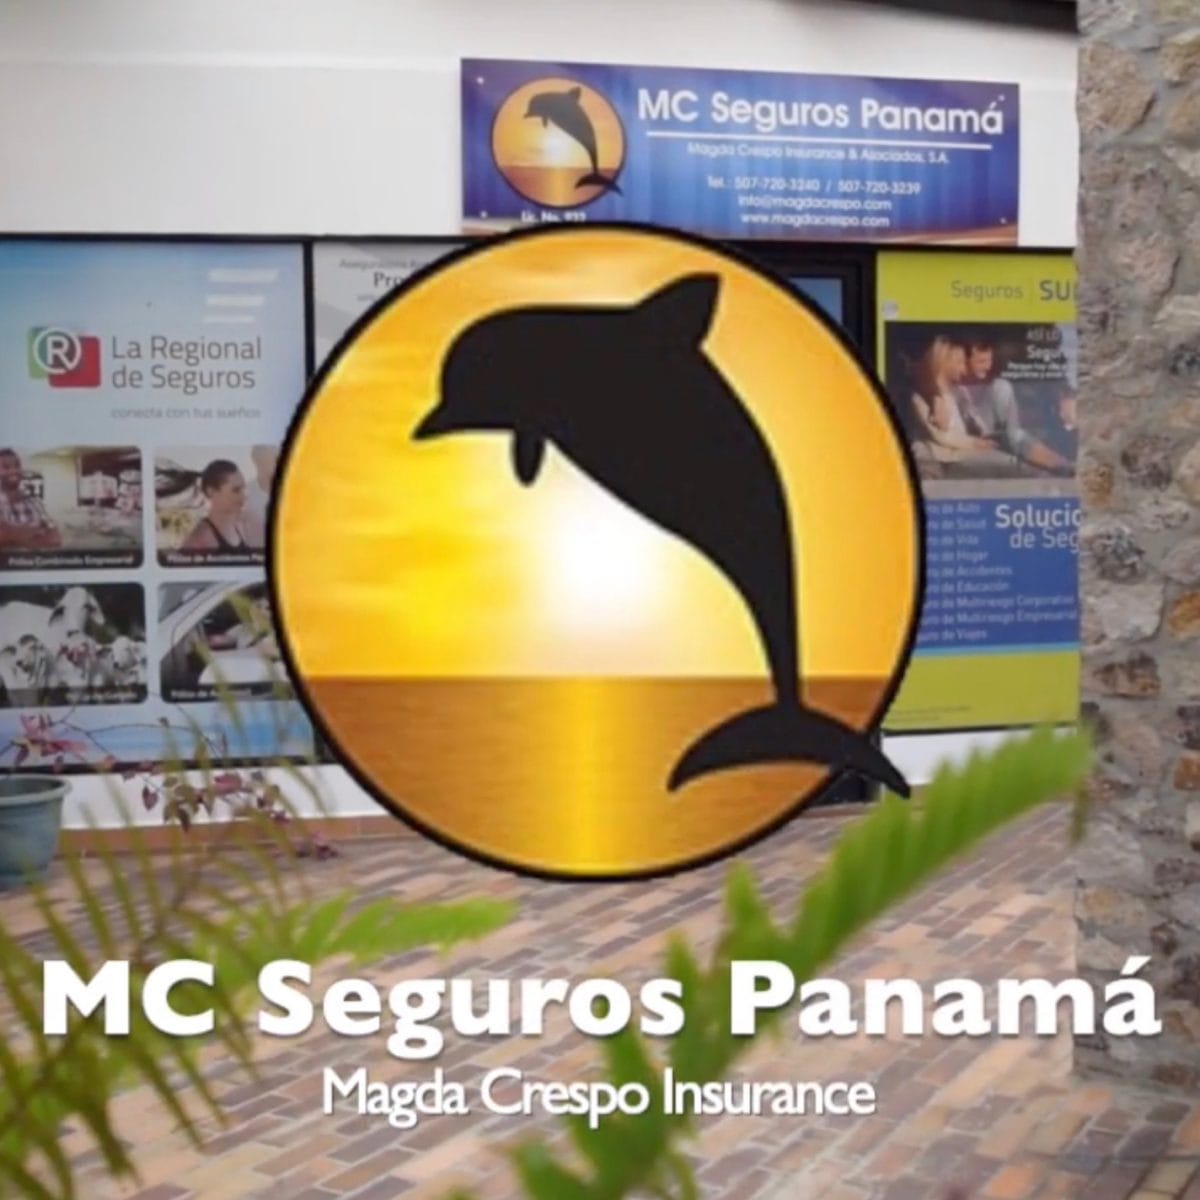 MC Seguros Panama Testimonial